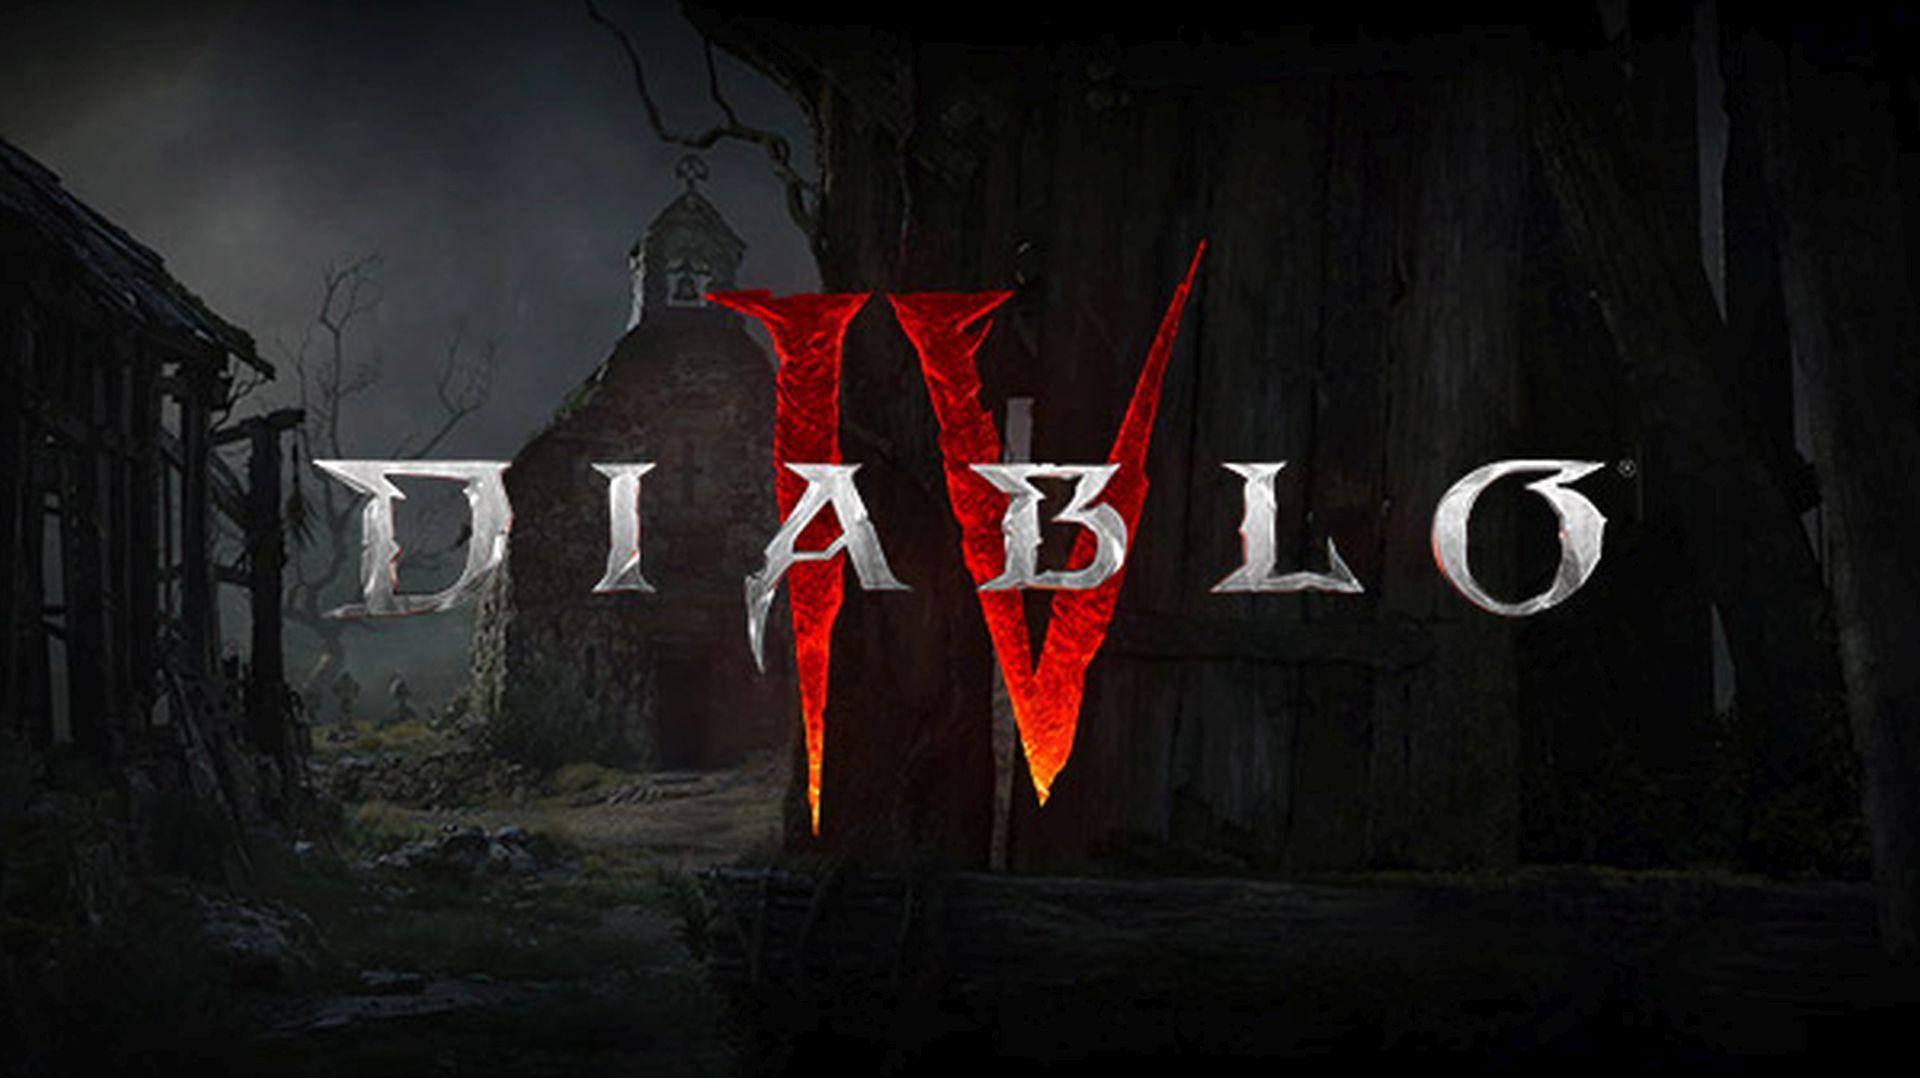 for ipod download Diablo 4